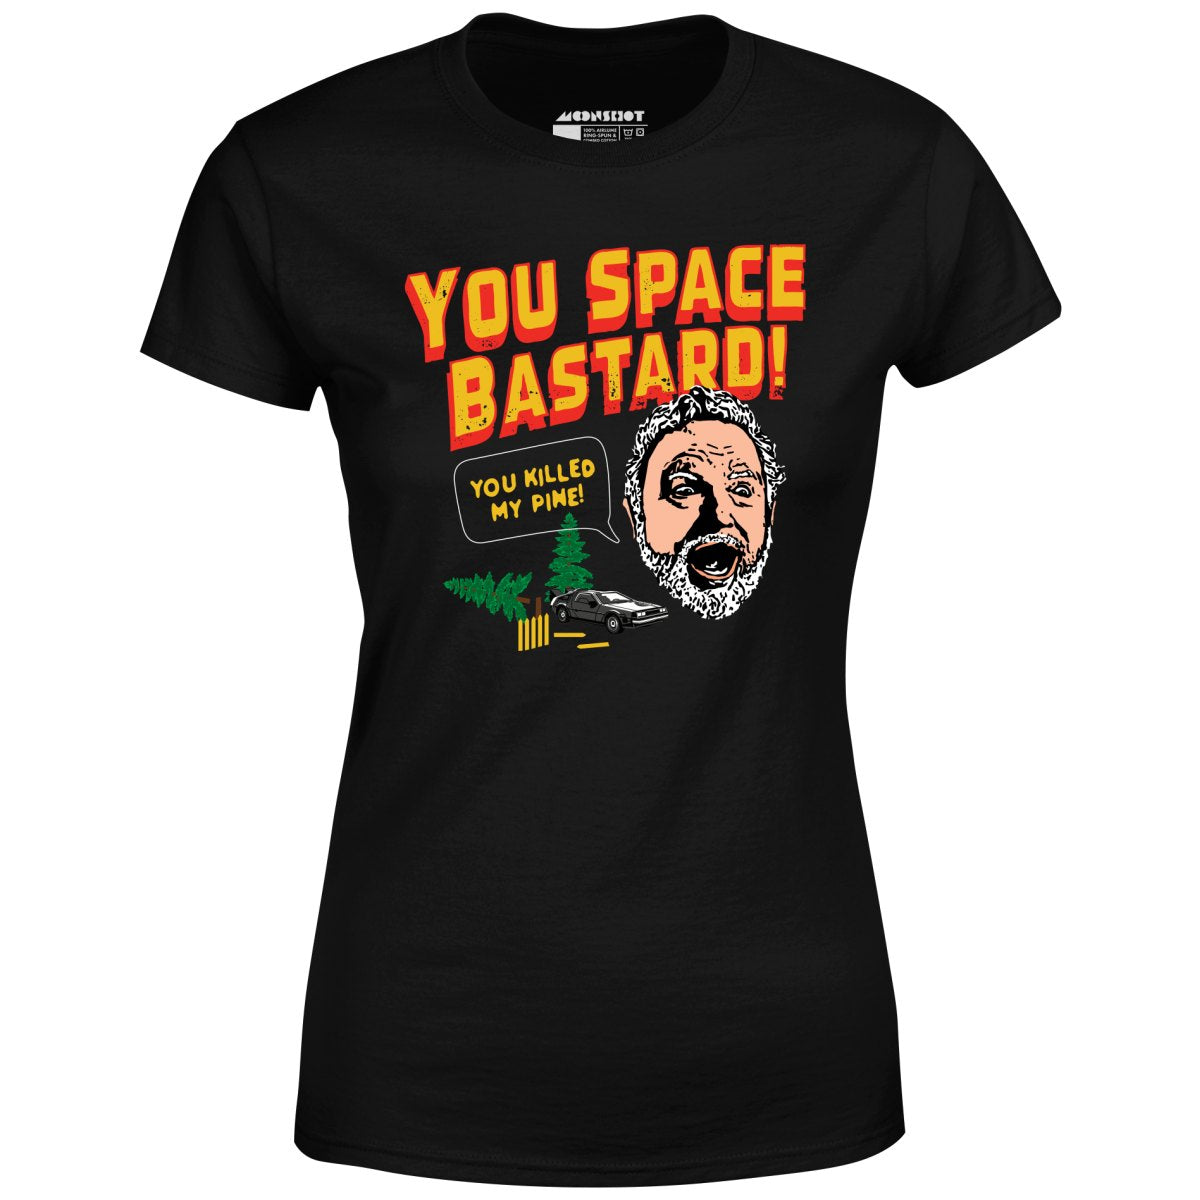 You Space Bastard! You Killed My Pine! - Women's T-Shirt